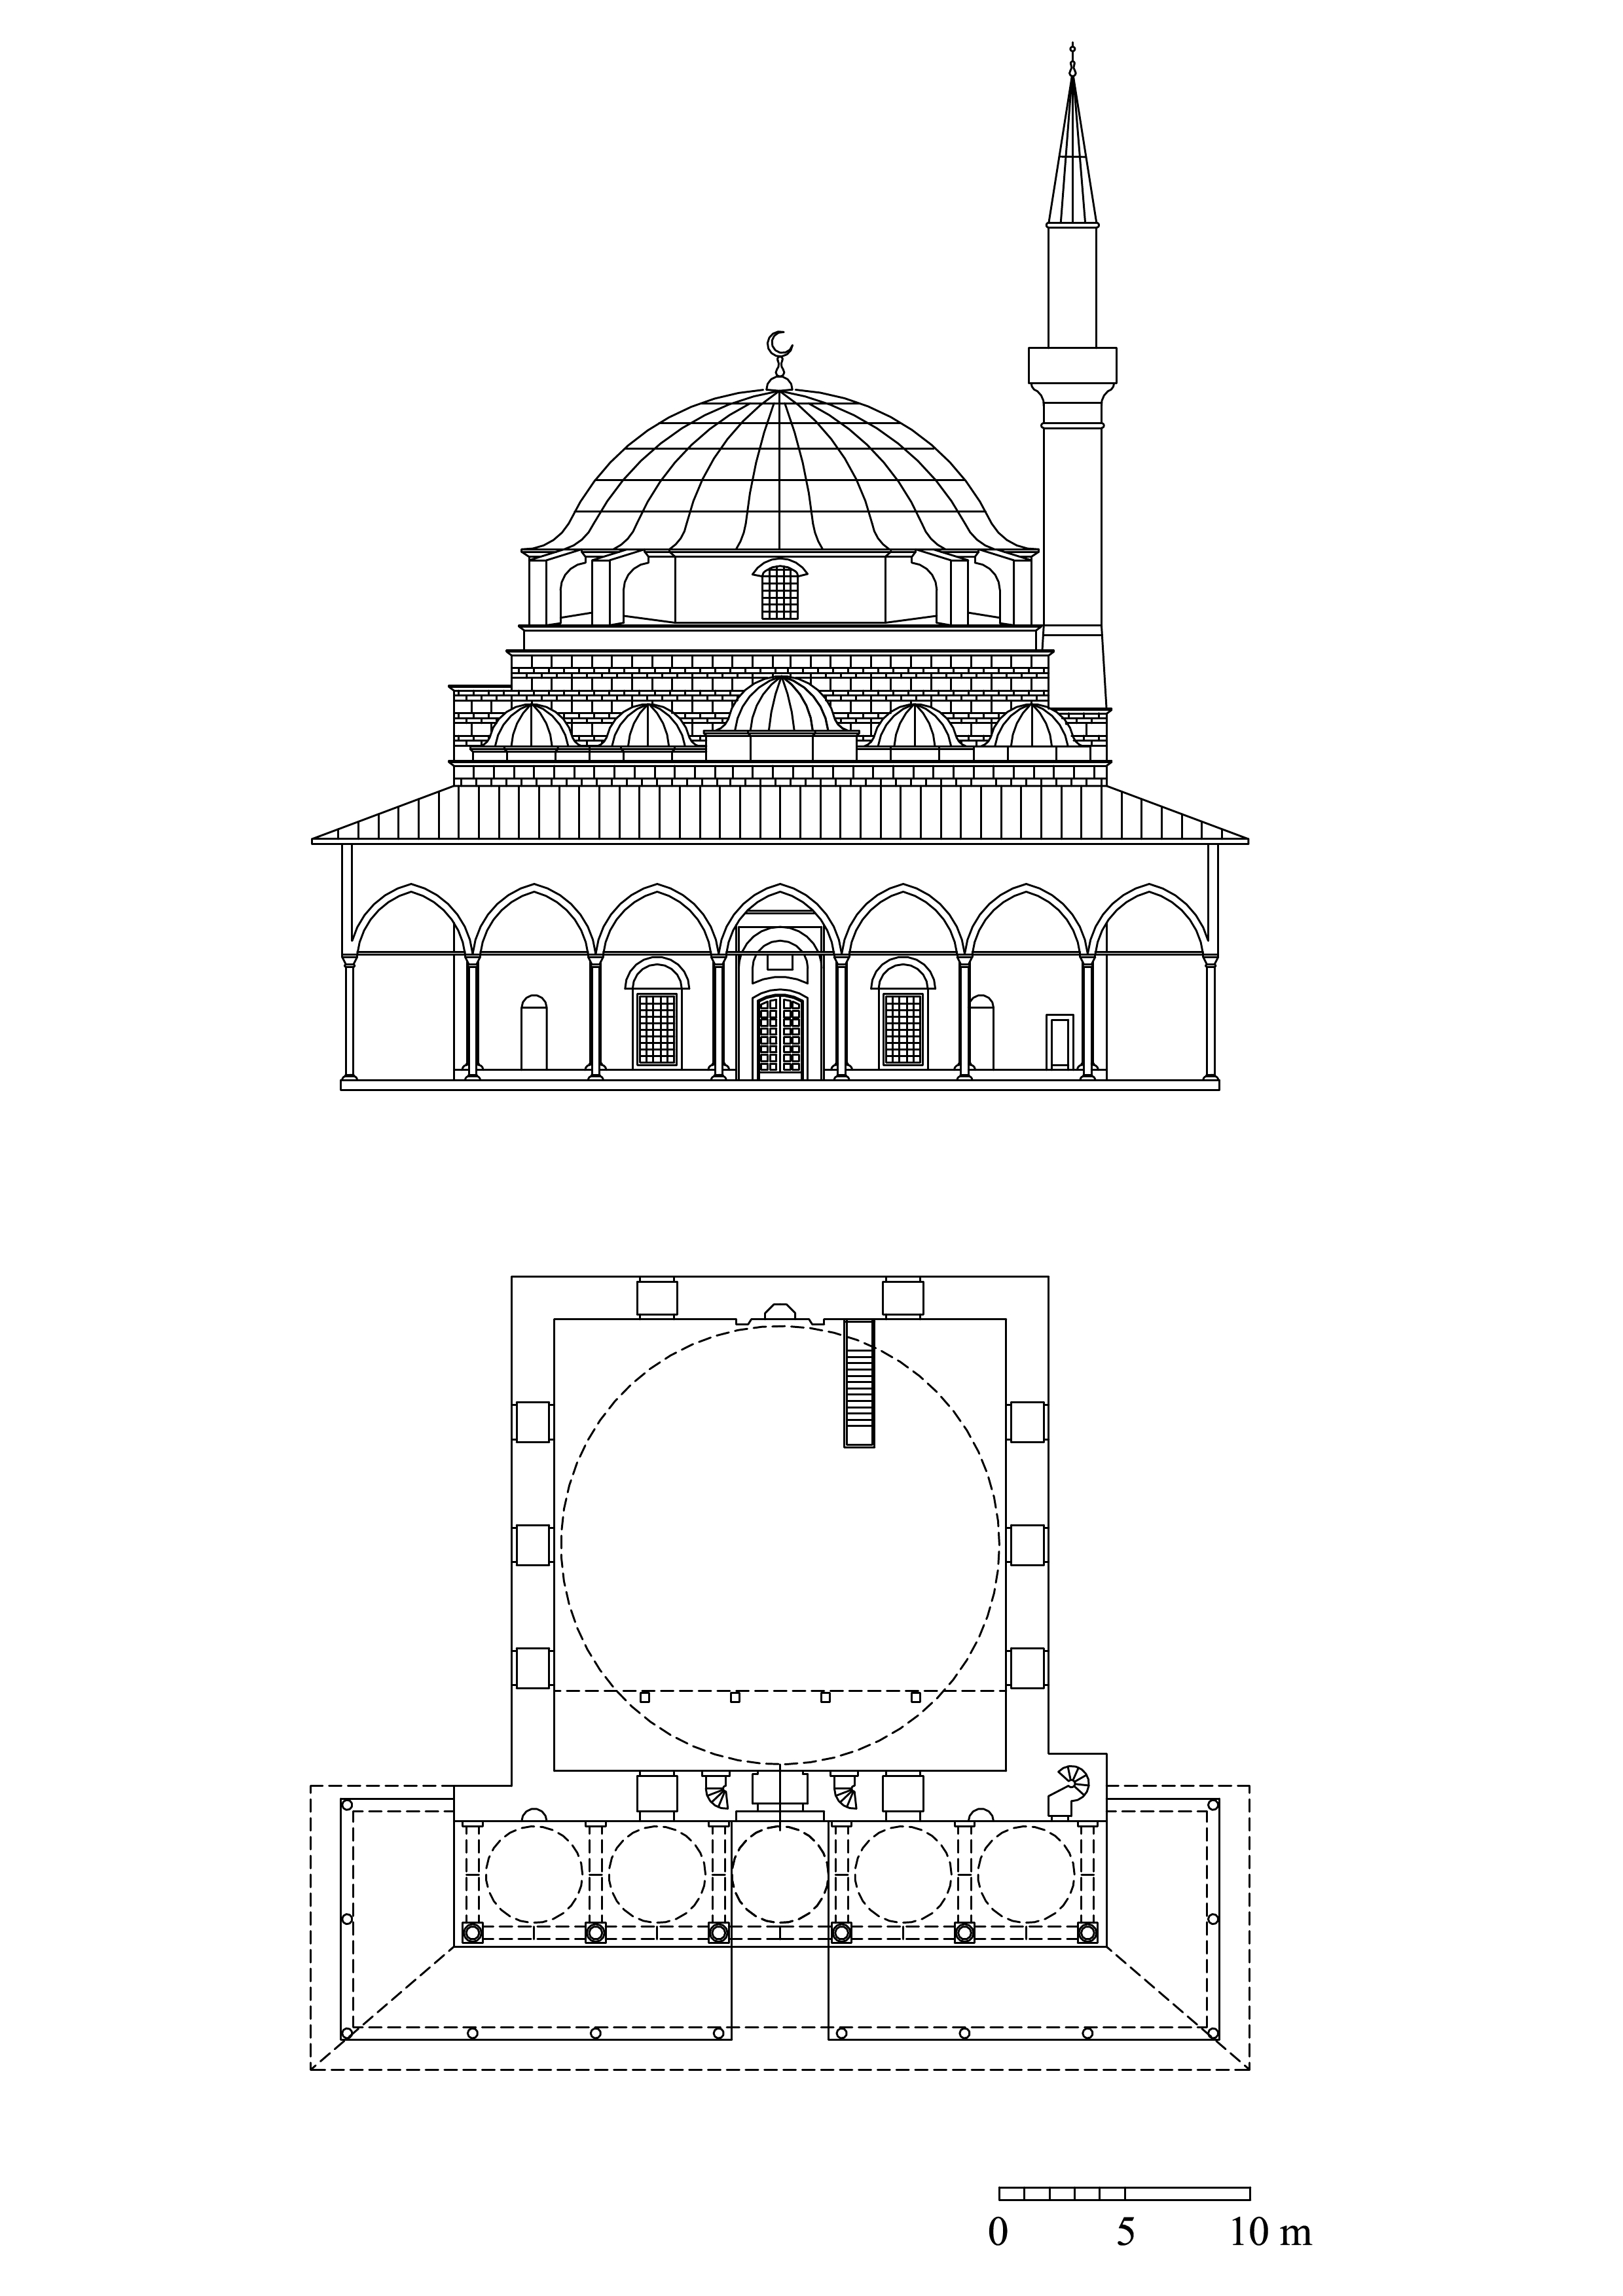 Floor plan of Osman Shah Mosque